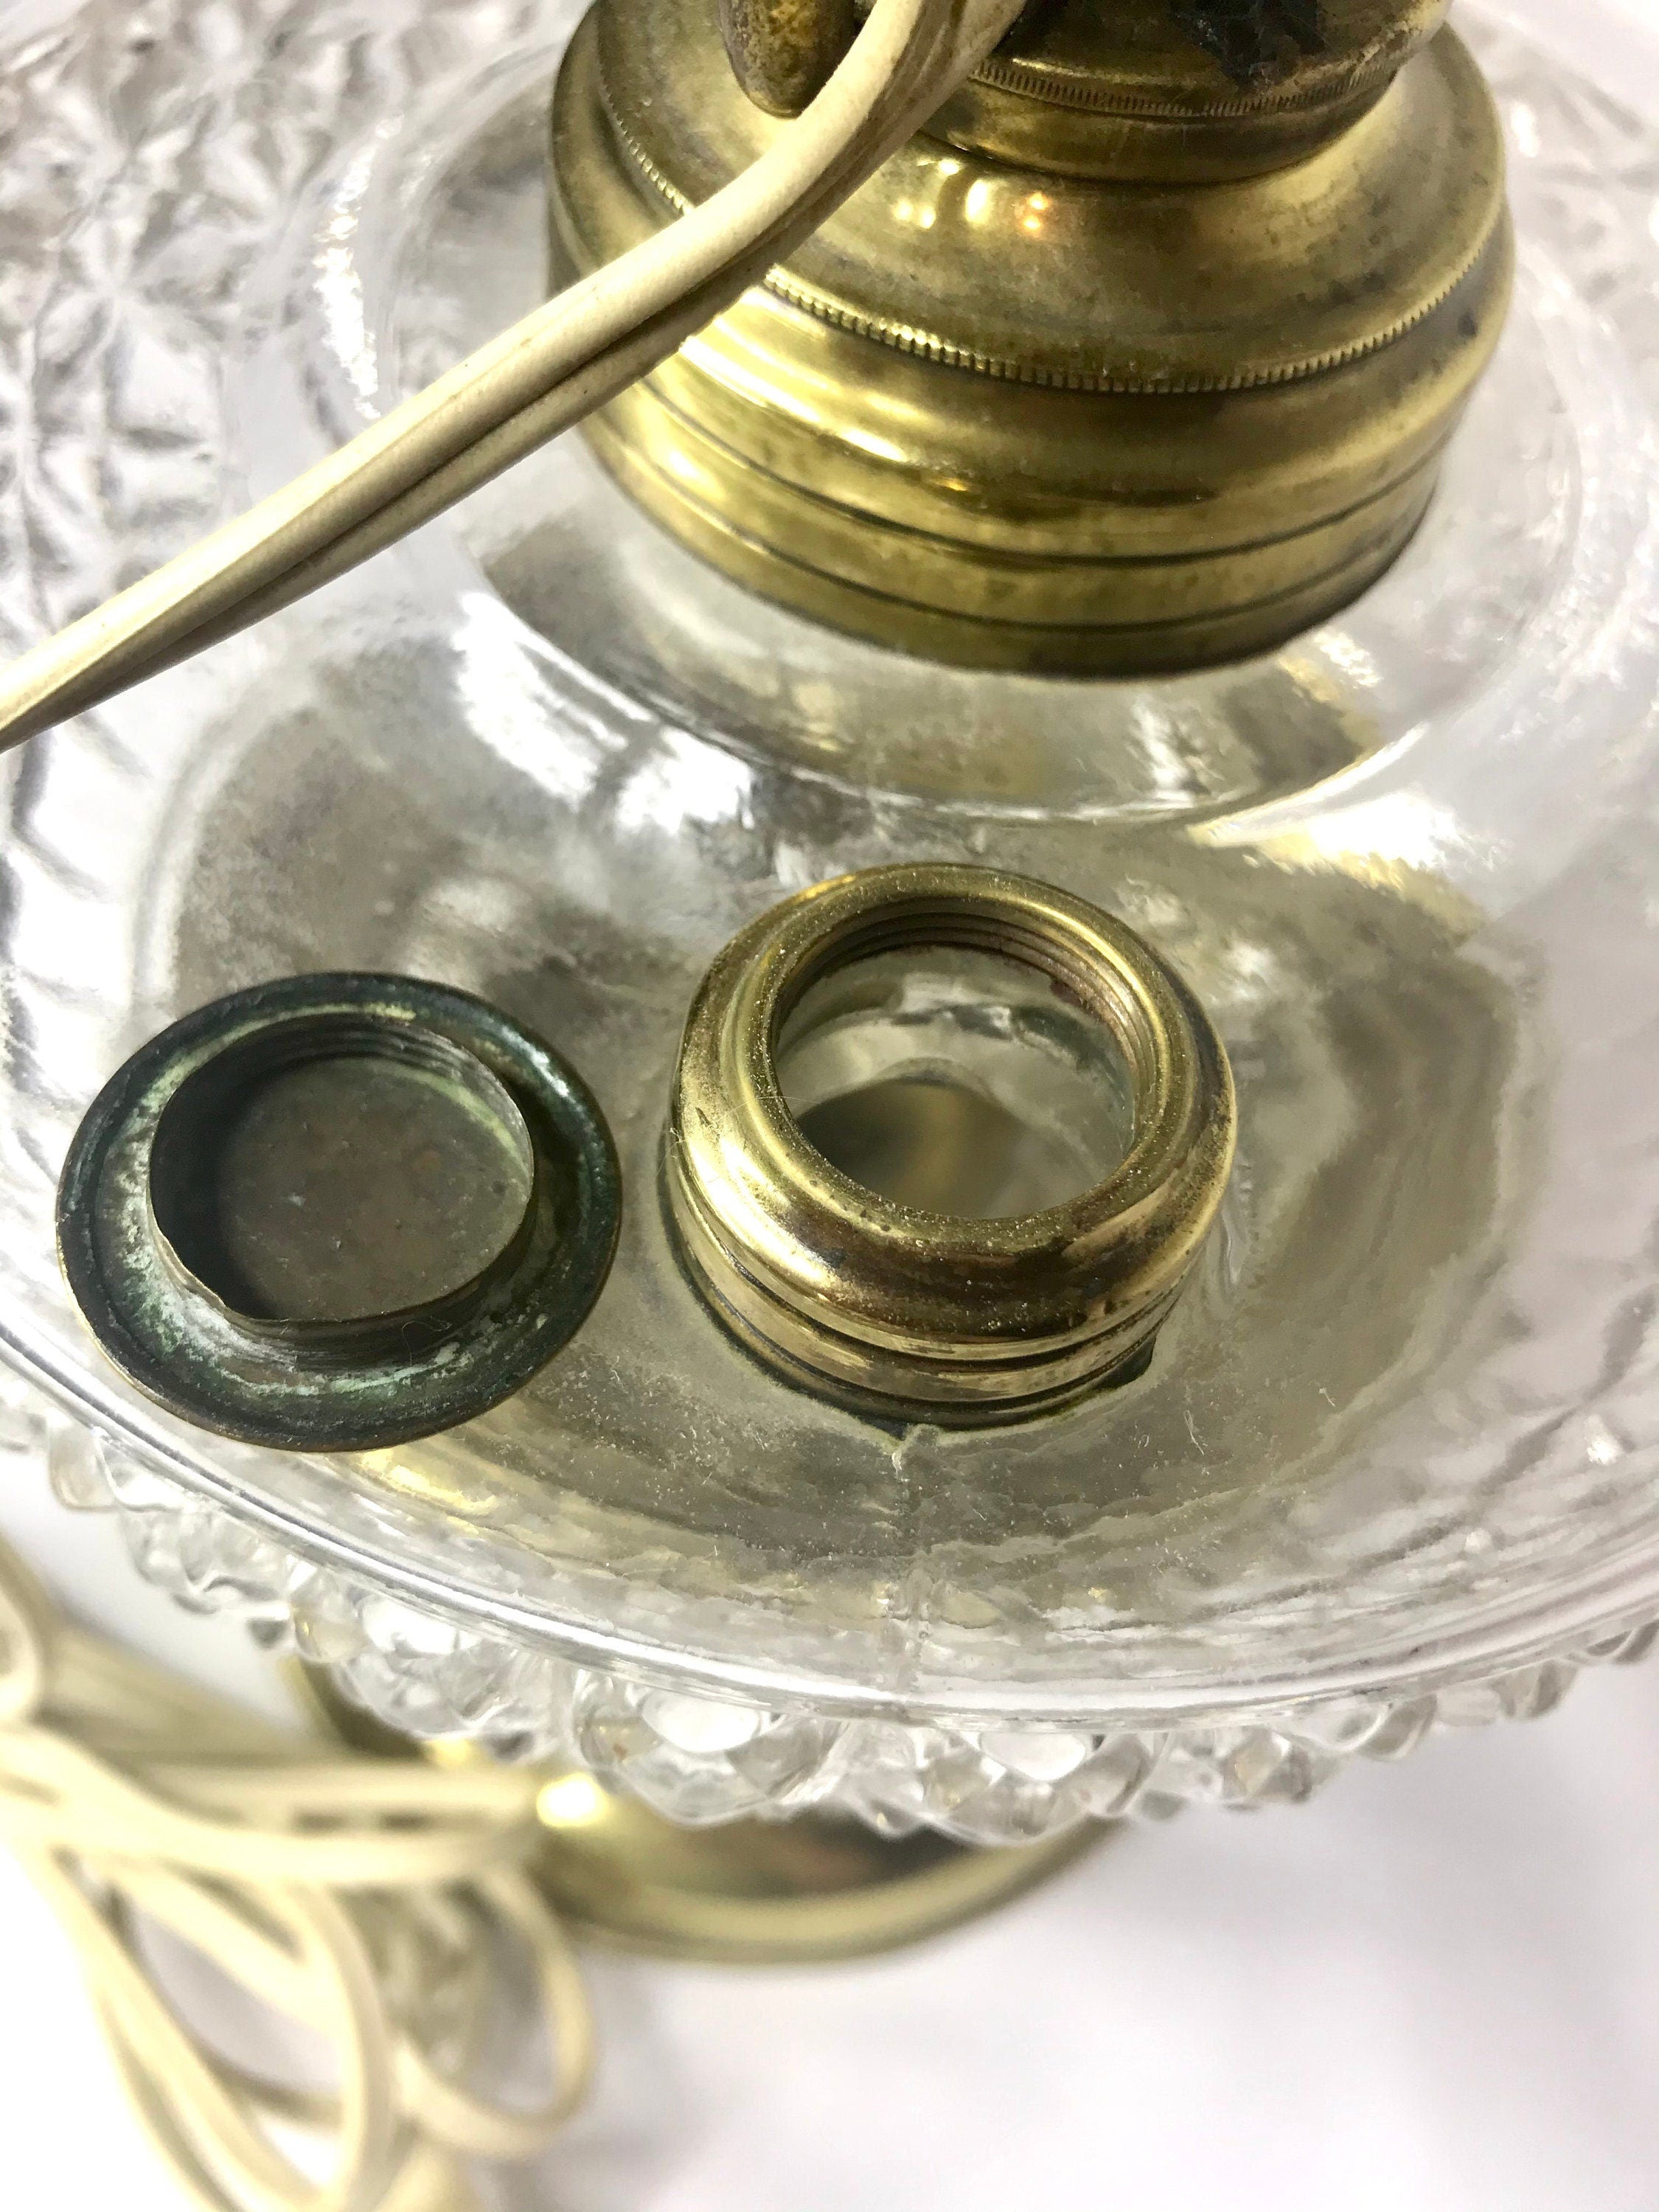 Vintage brass & glass oil/kerosene lamp with hurricane shade modified –  Terra Americana